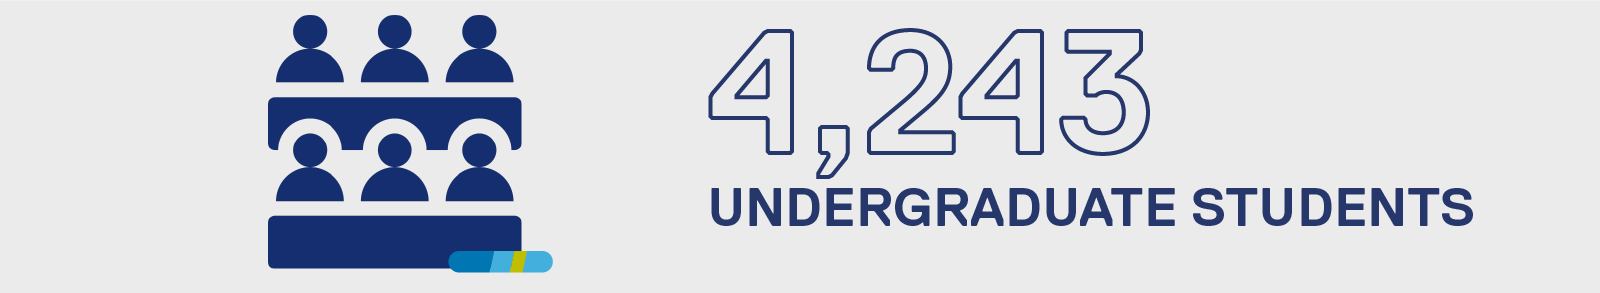 4243 undergraduate students